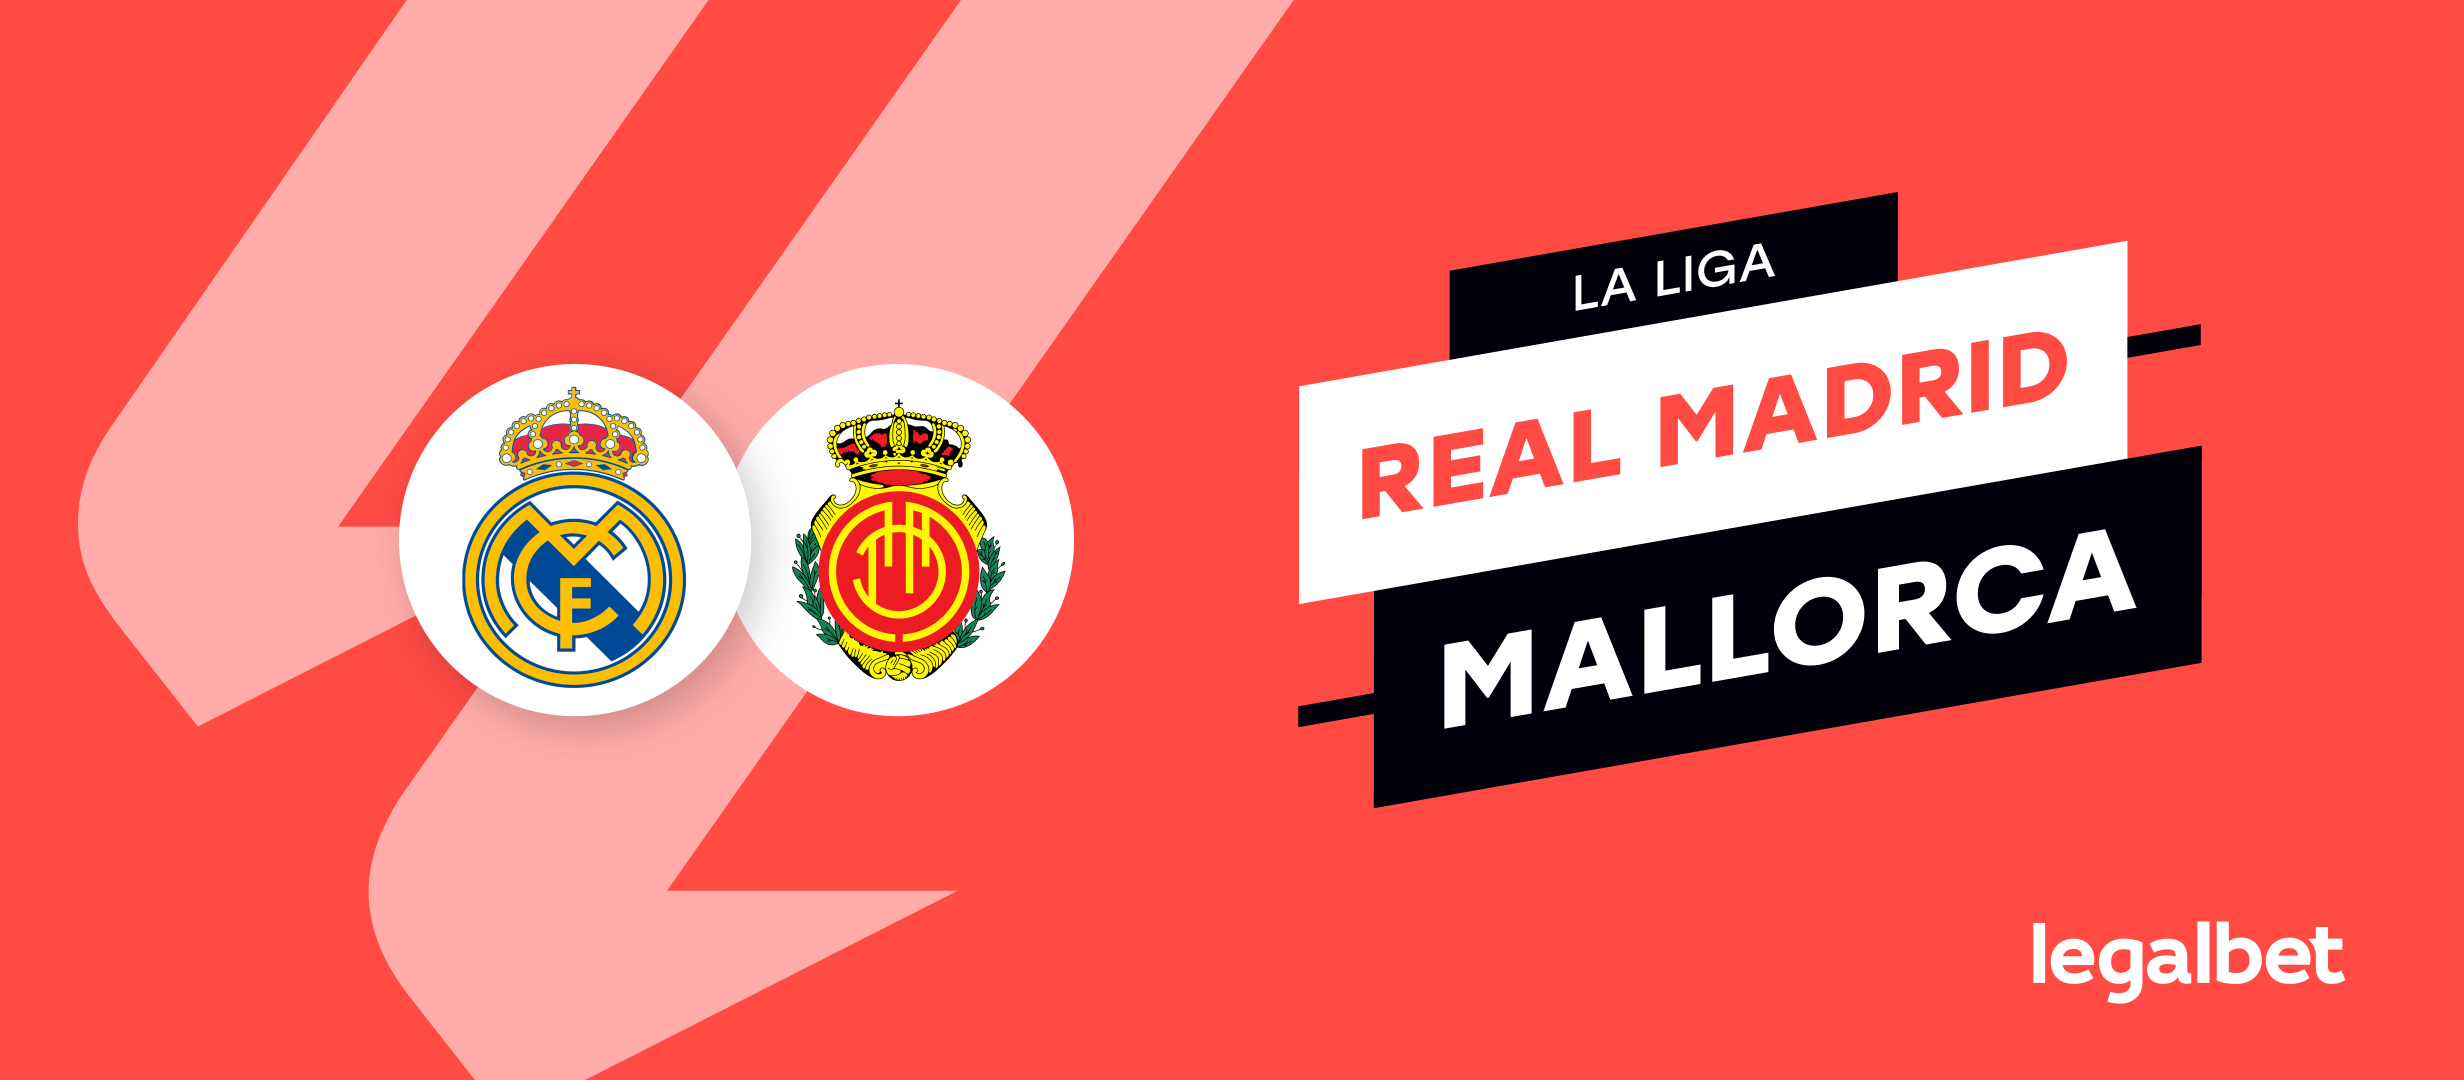 Real Madrid vs Mallorca – cote la pariuri, ponturi si informatii